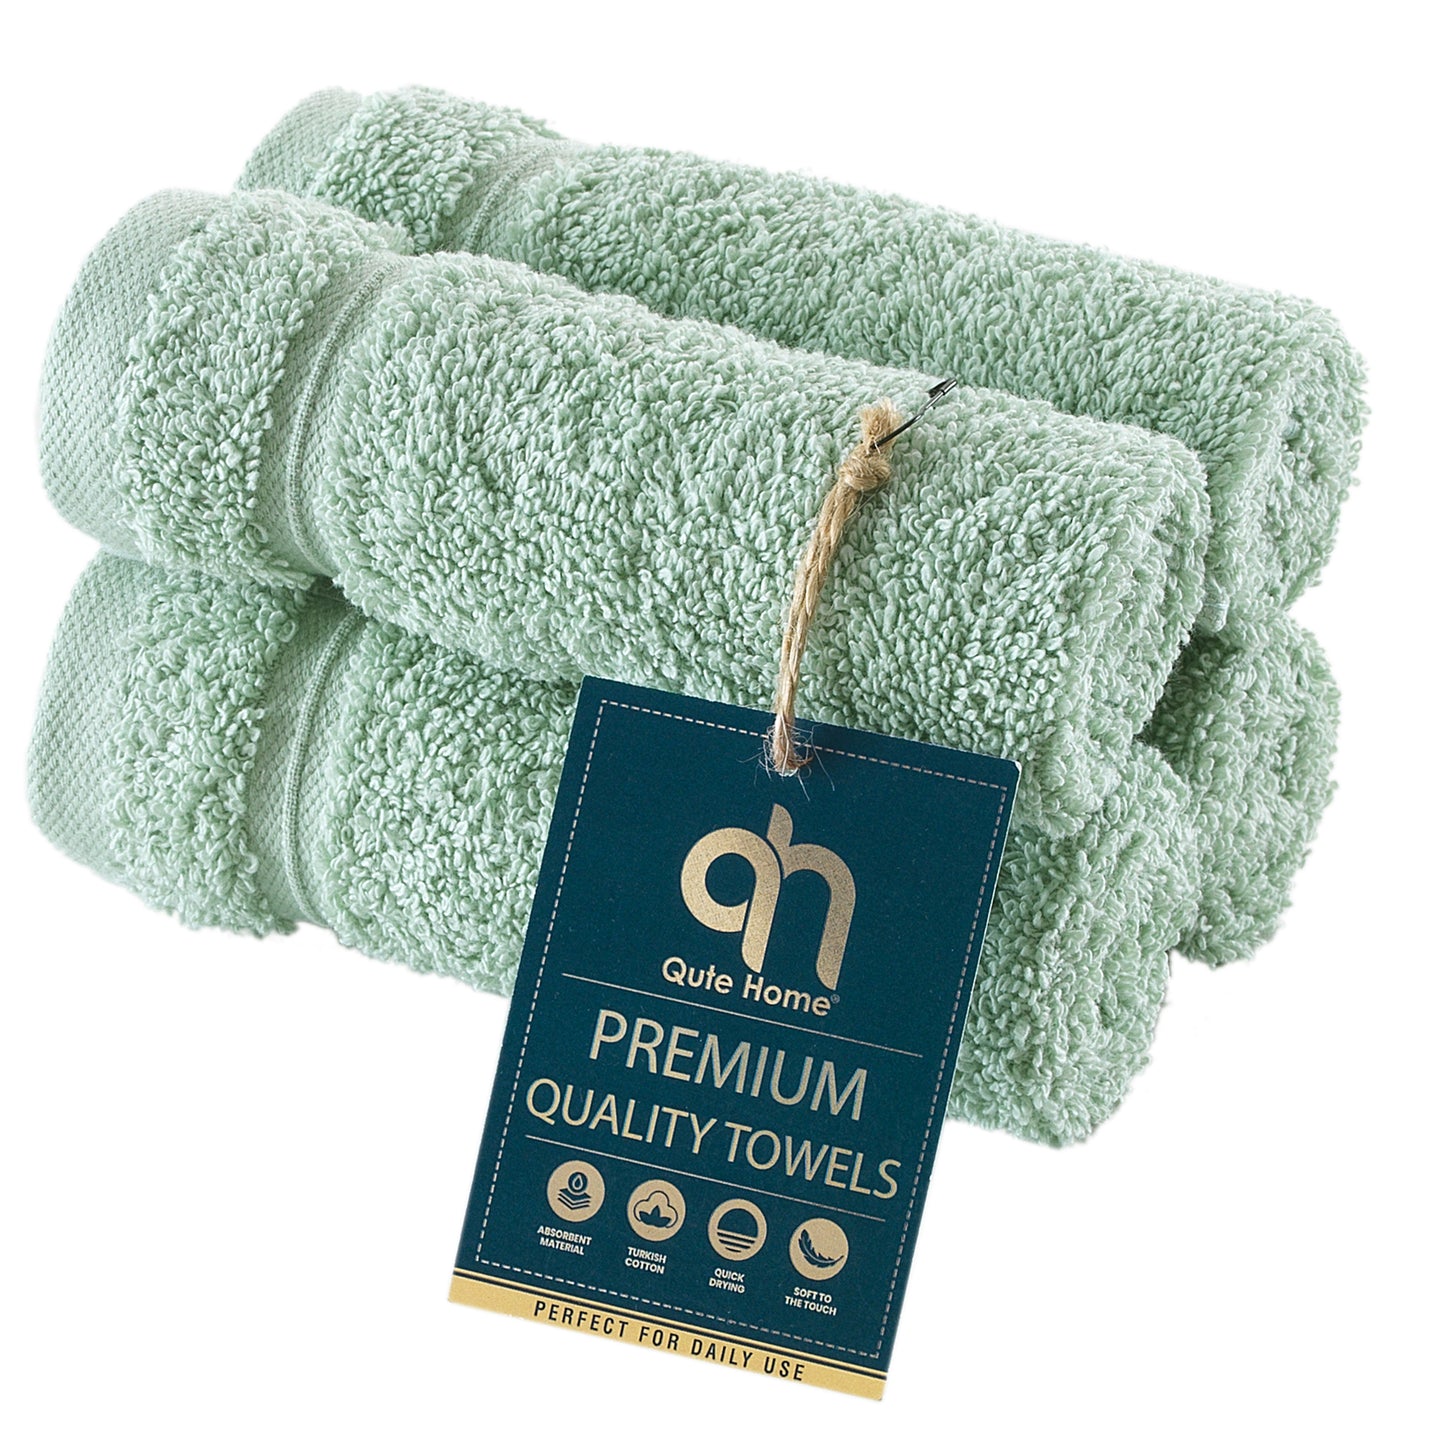 Qute Home Spa & Hotel Towels Towel Set, Bath Towels 27"x54", Hand Towels 16"x30", and Washcloths 13"x13"